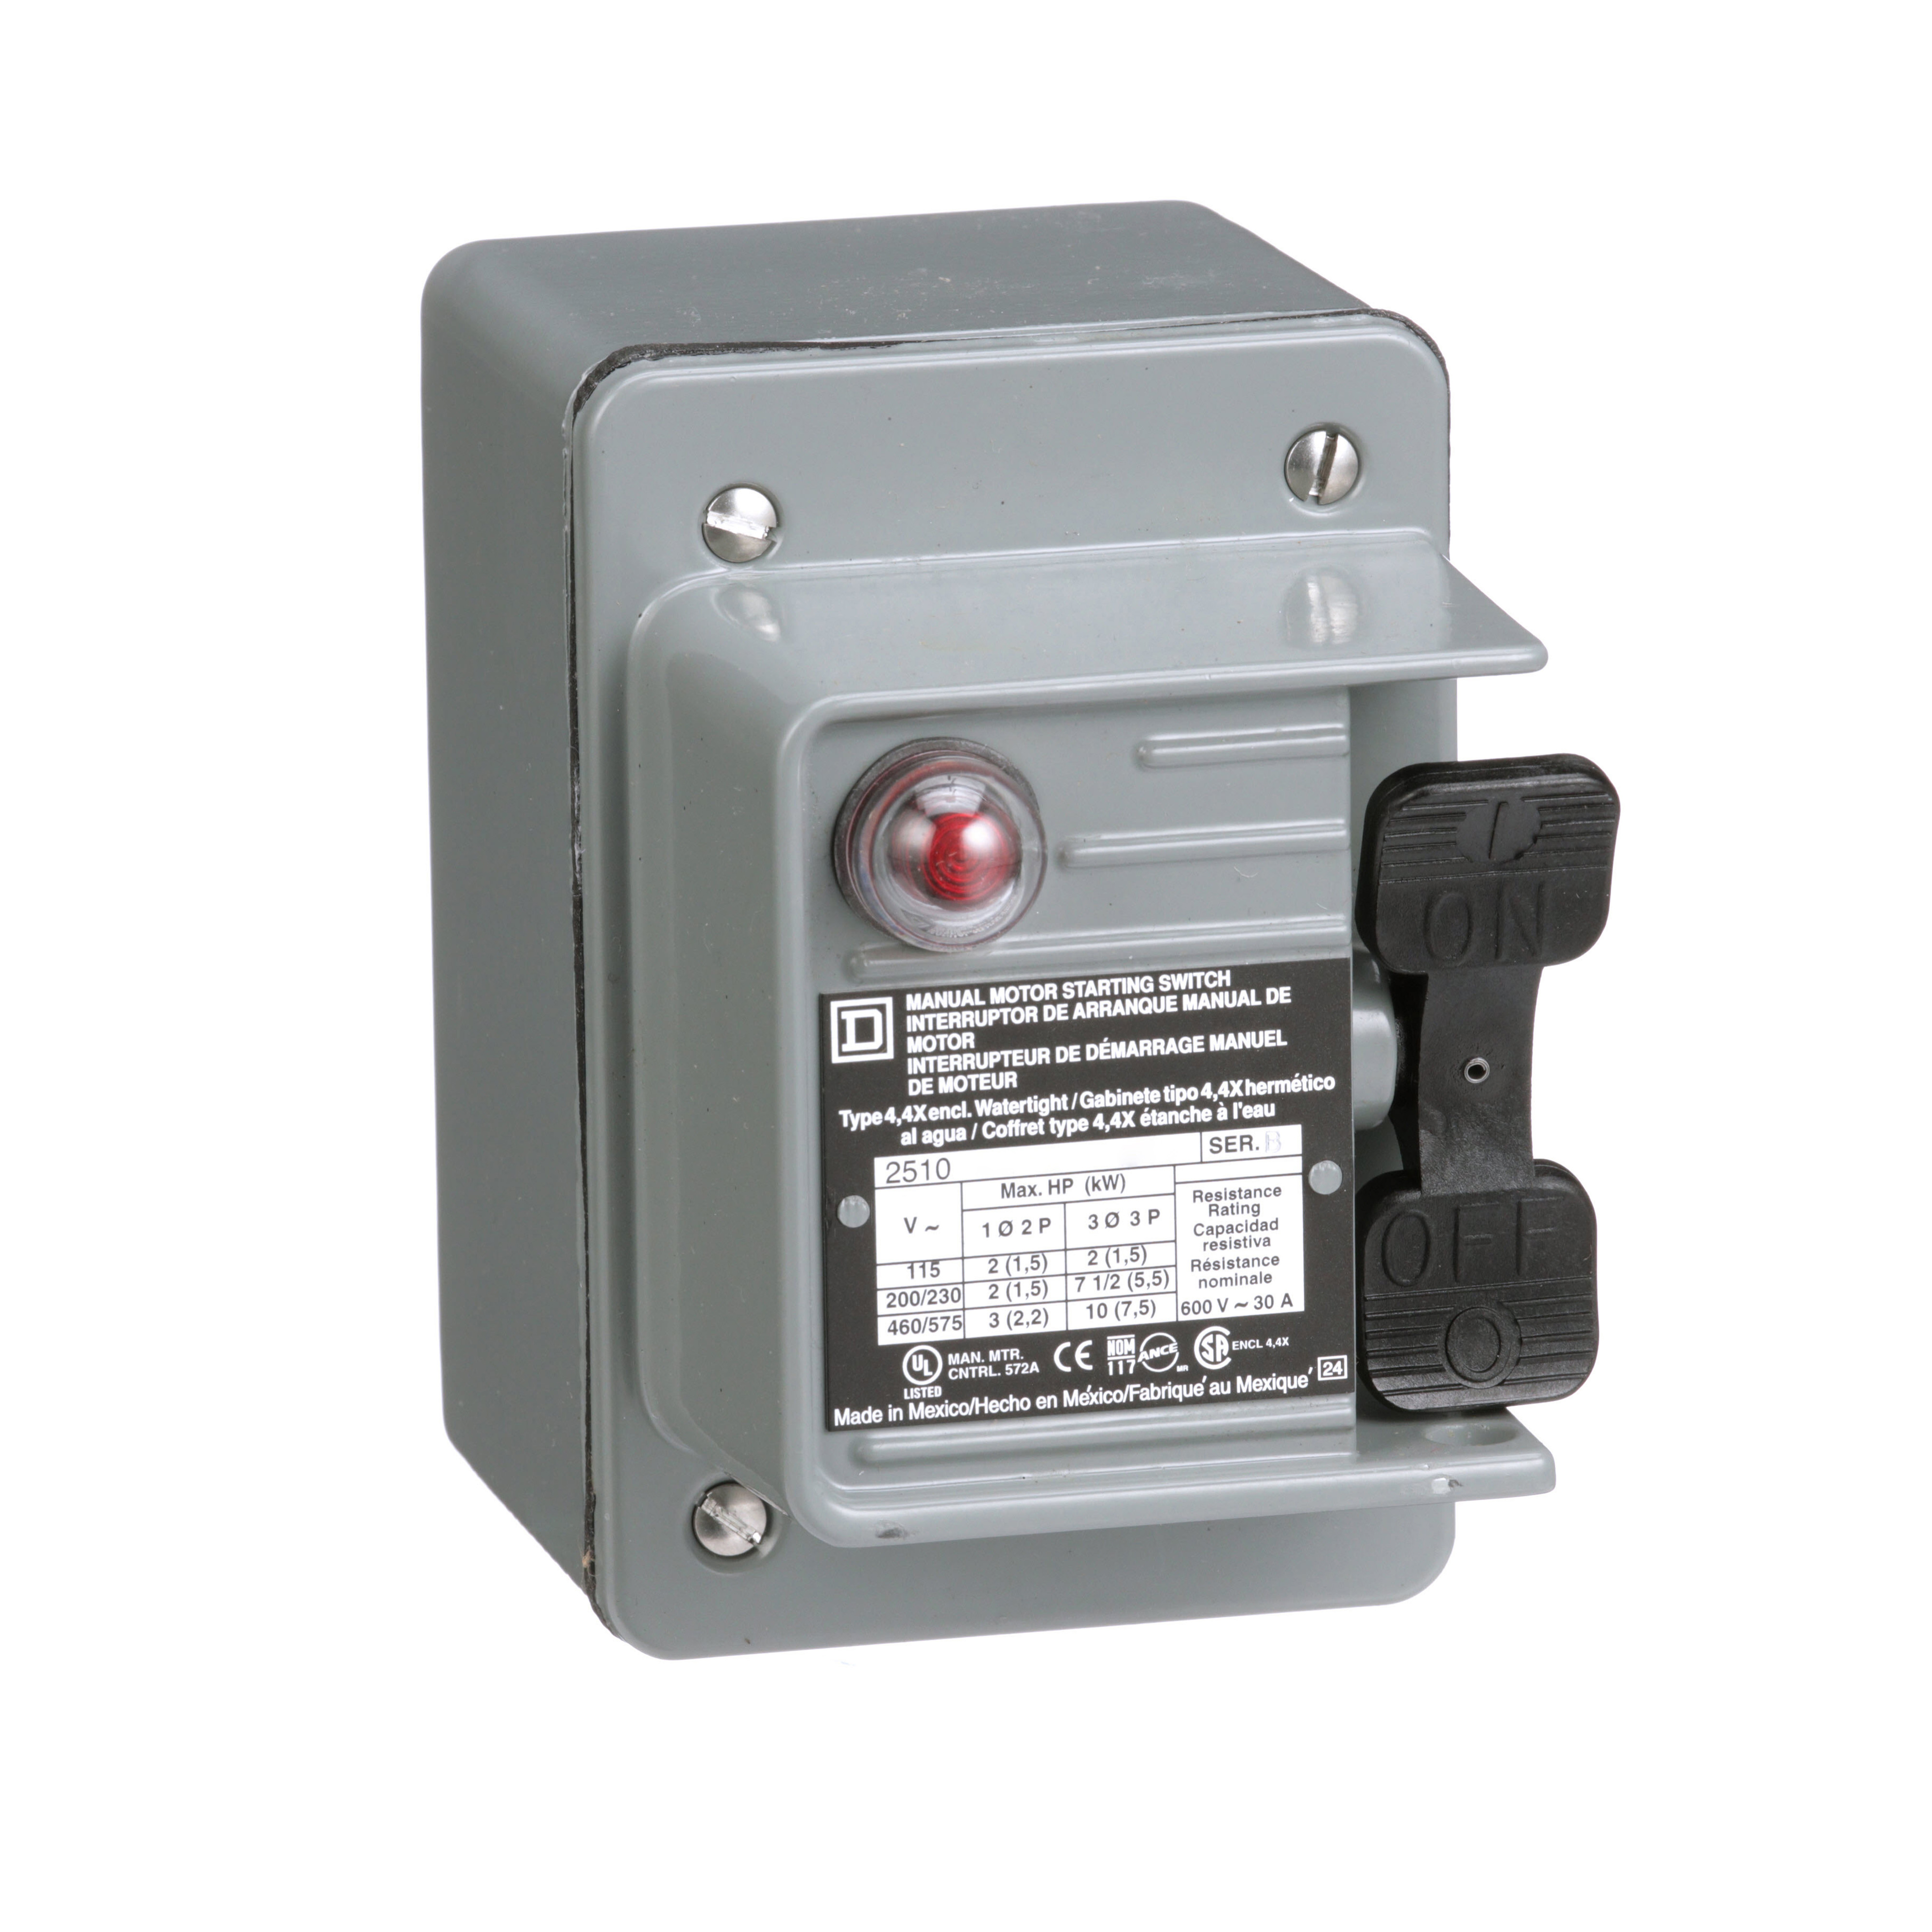 Switch, manual, 30A, 2 pole, 3 HP at 575 VAC, single phase, toggle operated, red 115 VAC indicator, NEMA 4, one conduit